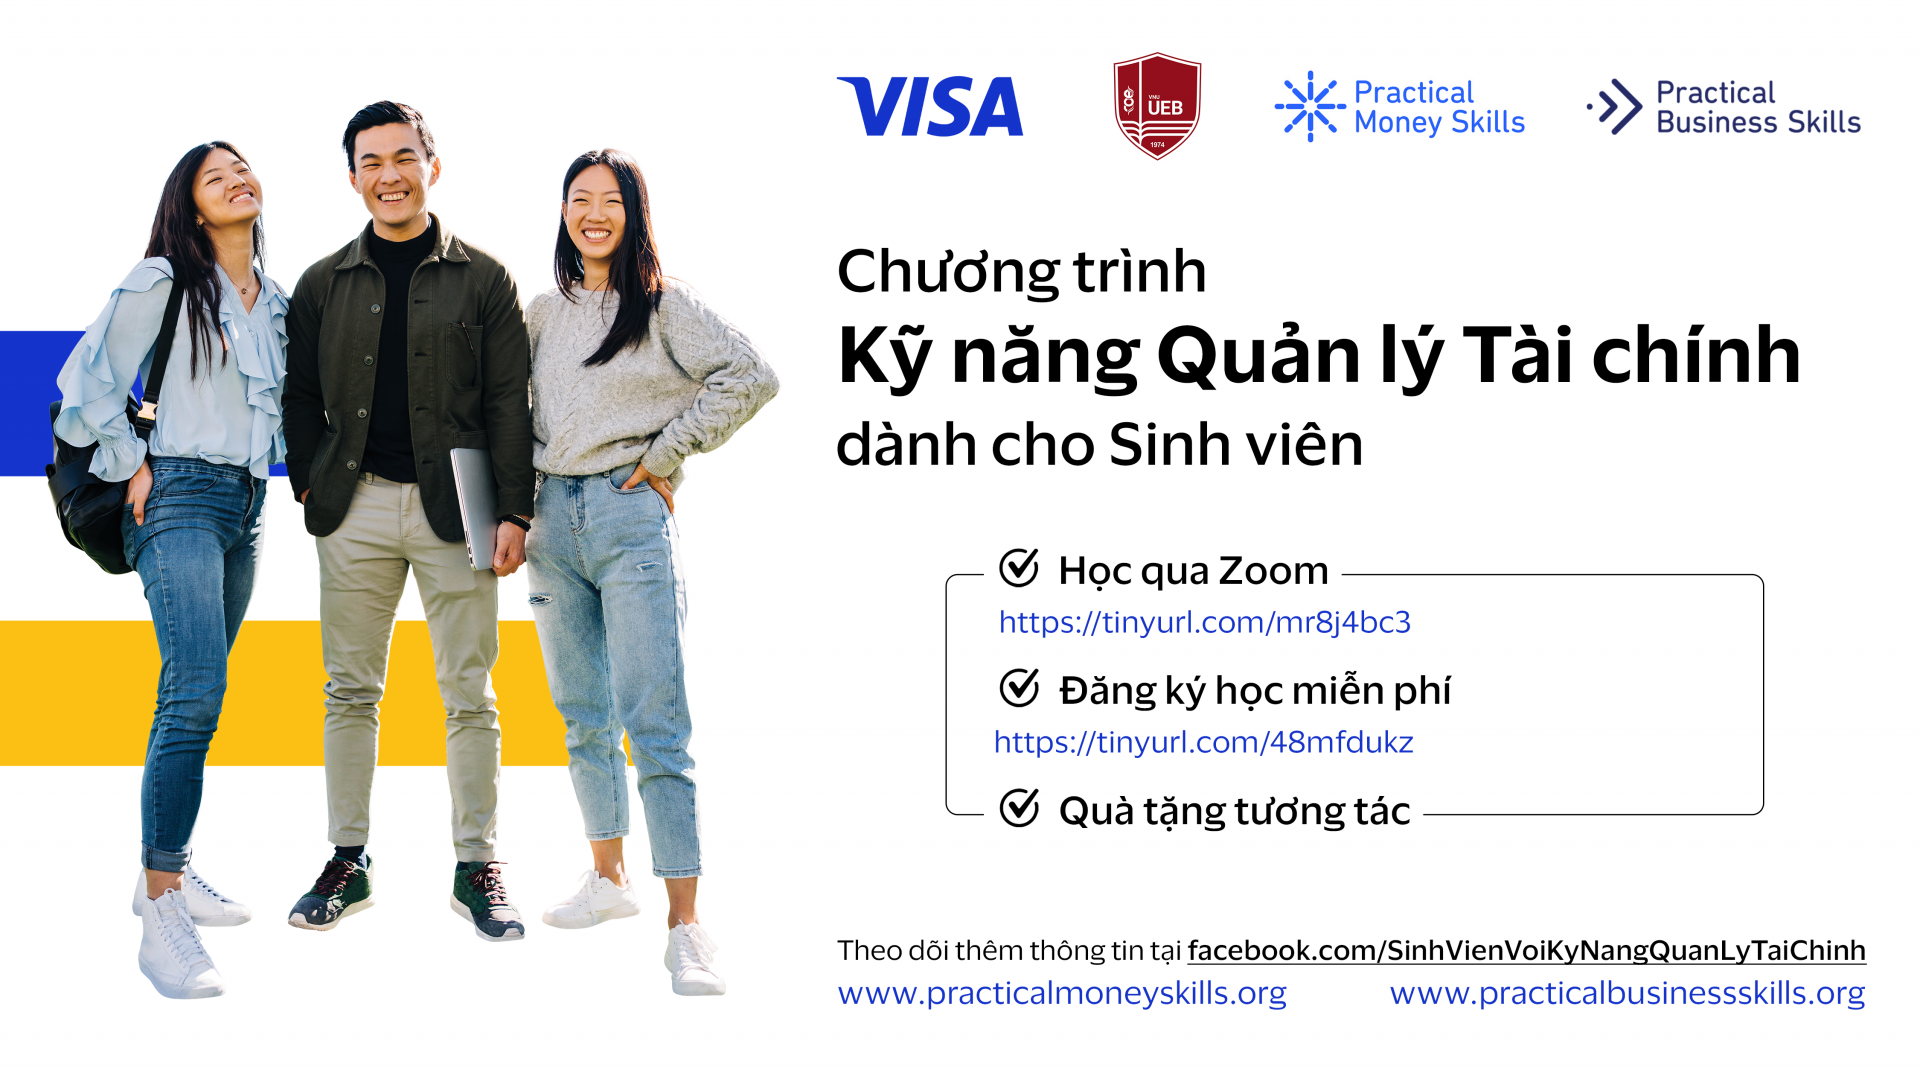 Visa extends partnership with Vietnamese universities to promote Practical Money Skills